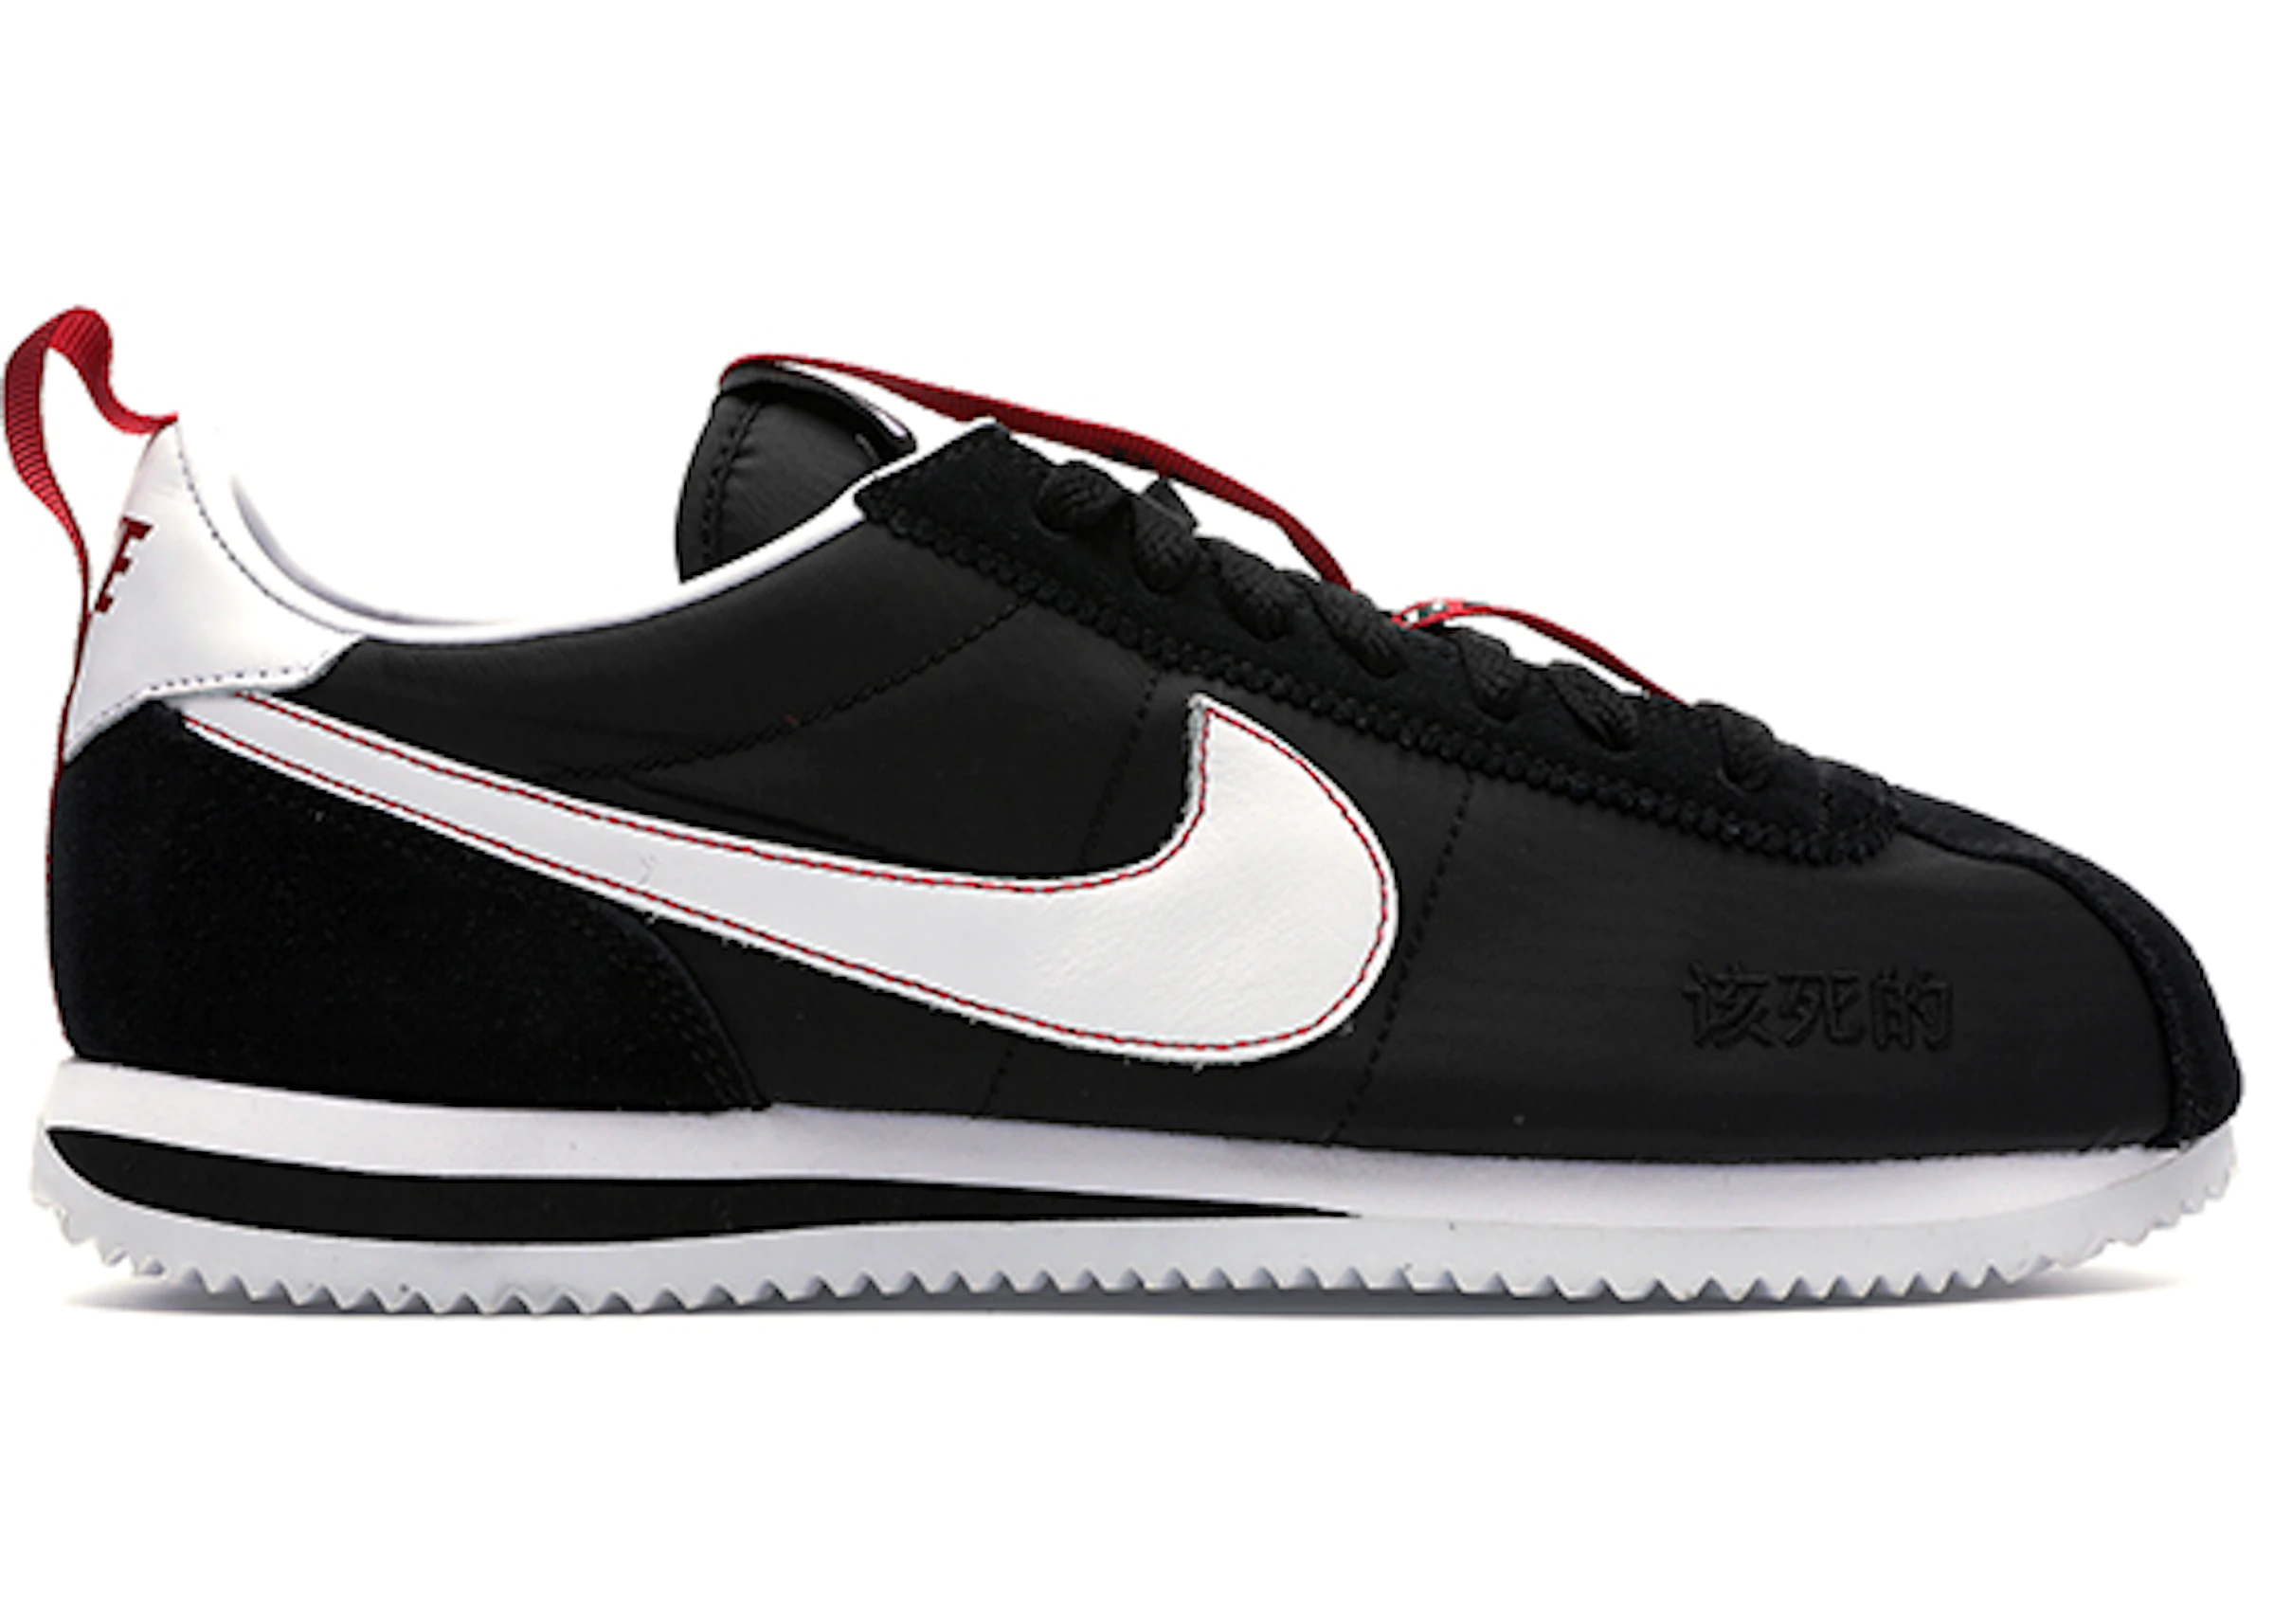 Nike kendrick lamar cortez shoes Cortez Kenny 3 Kendrick Lamar TDE the Championship - BV0833